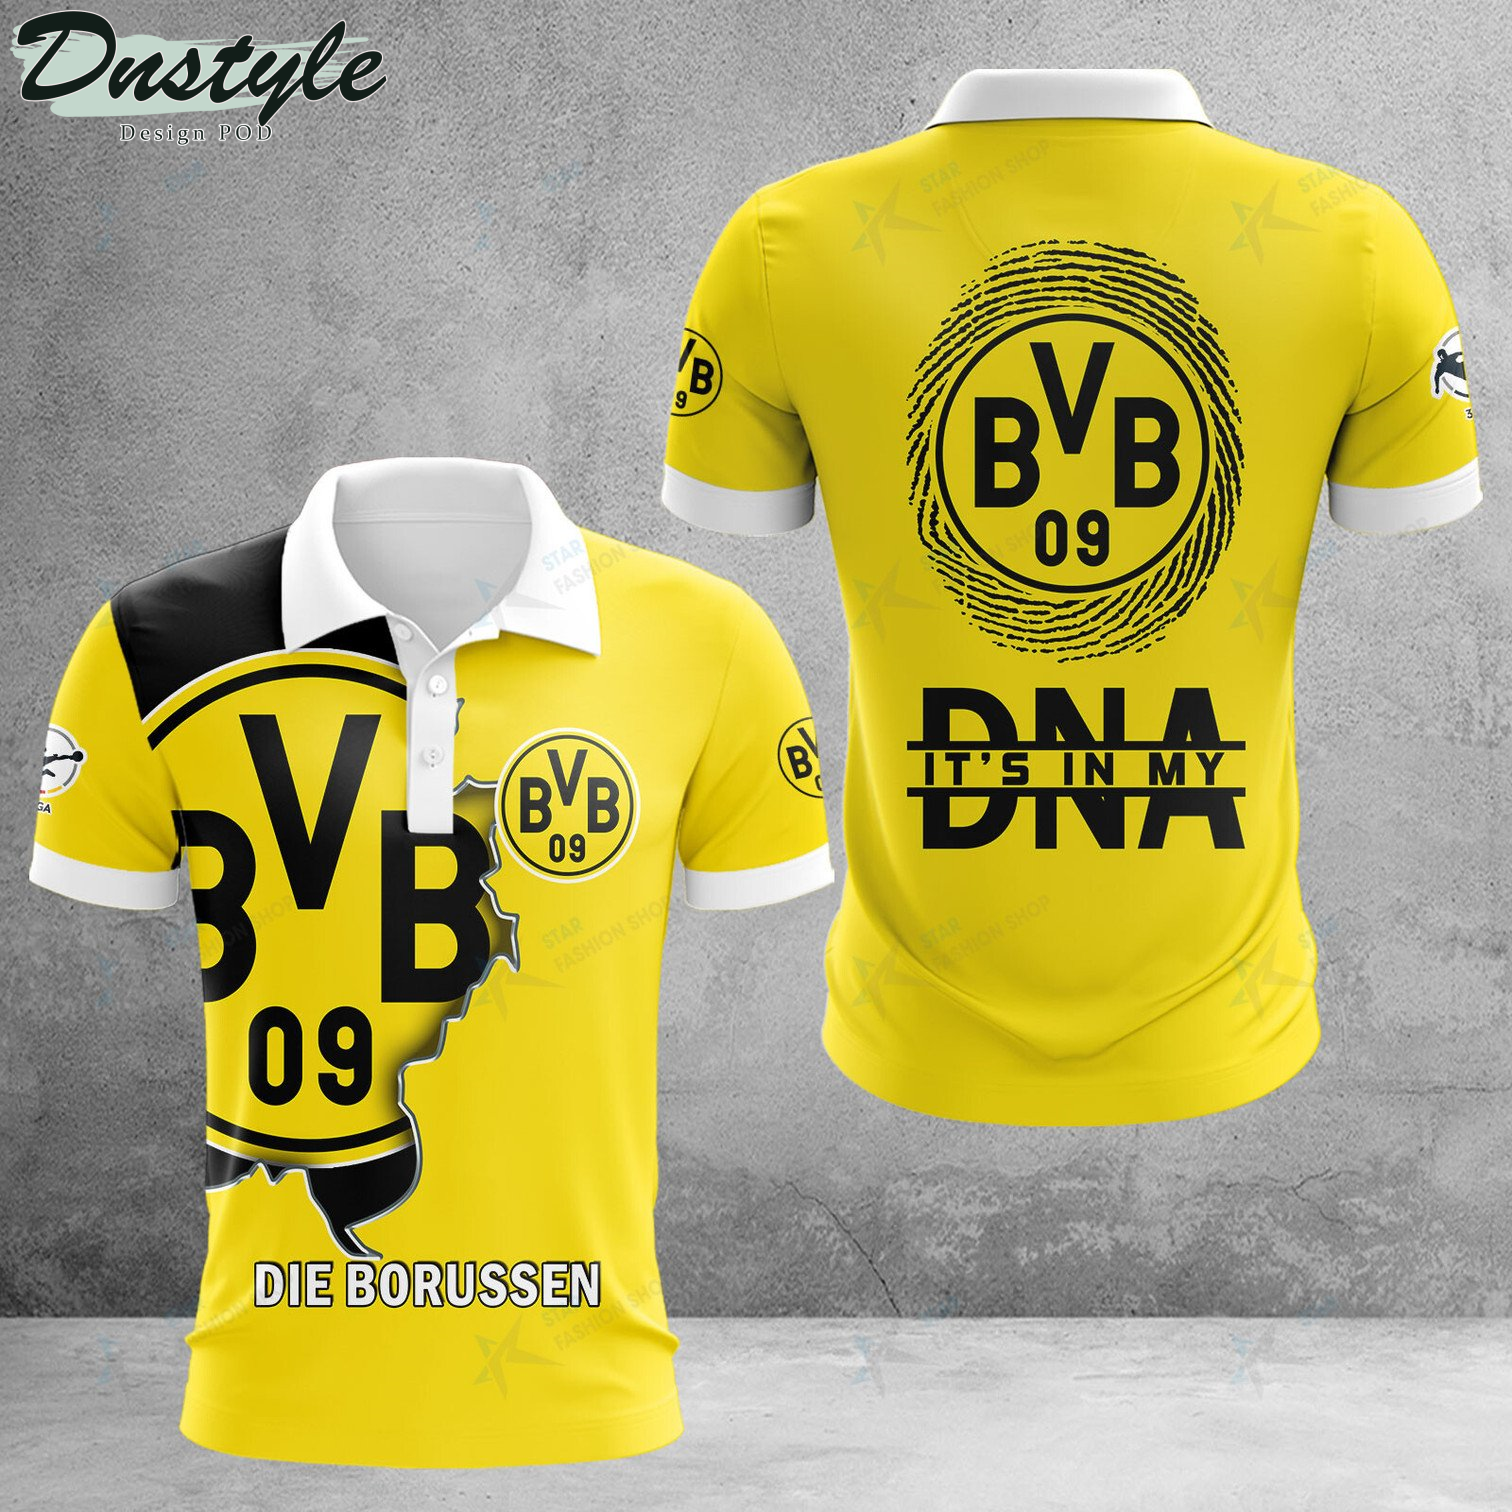 Borussia Dortmund II it's in my DNA polo shirt